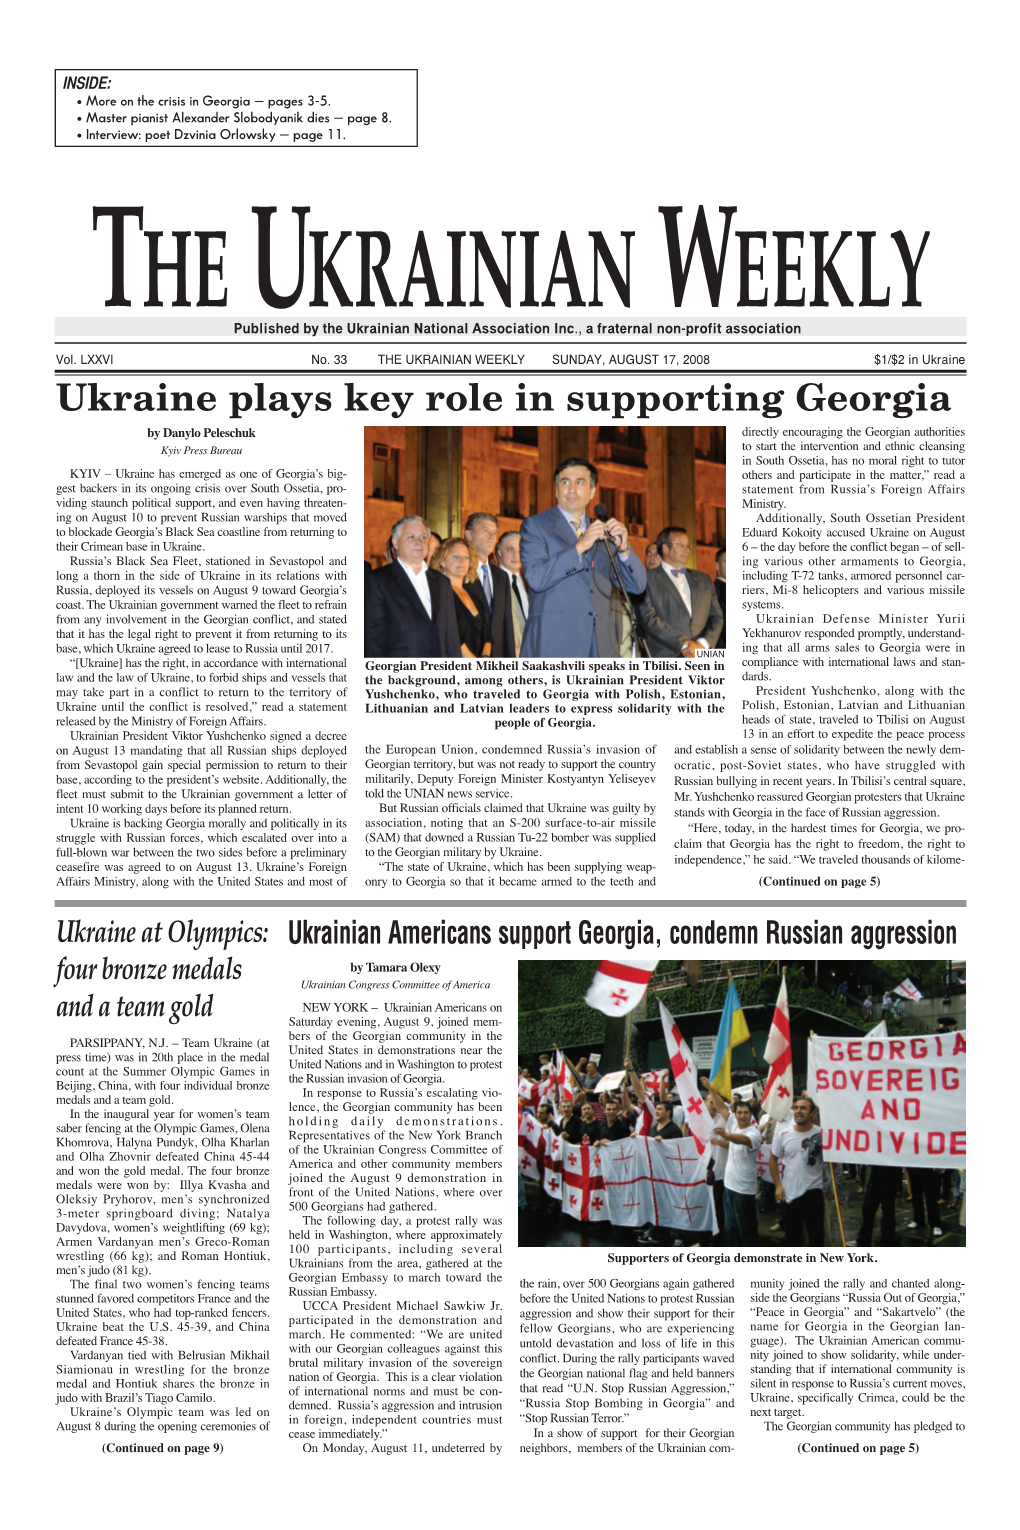 The Ukrainian Weekly 2008, No.33